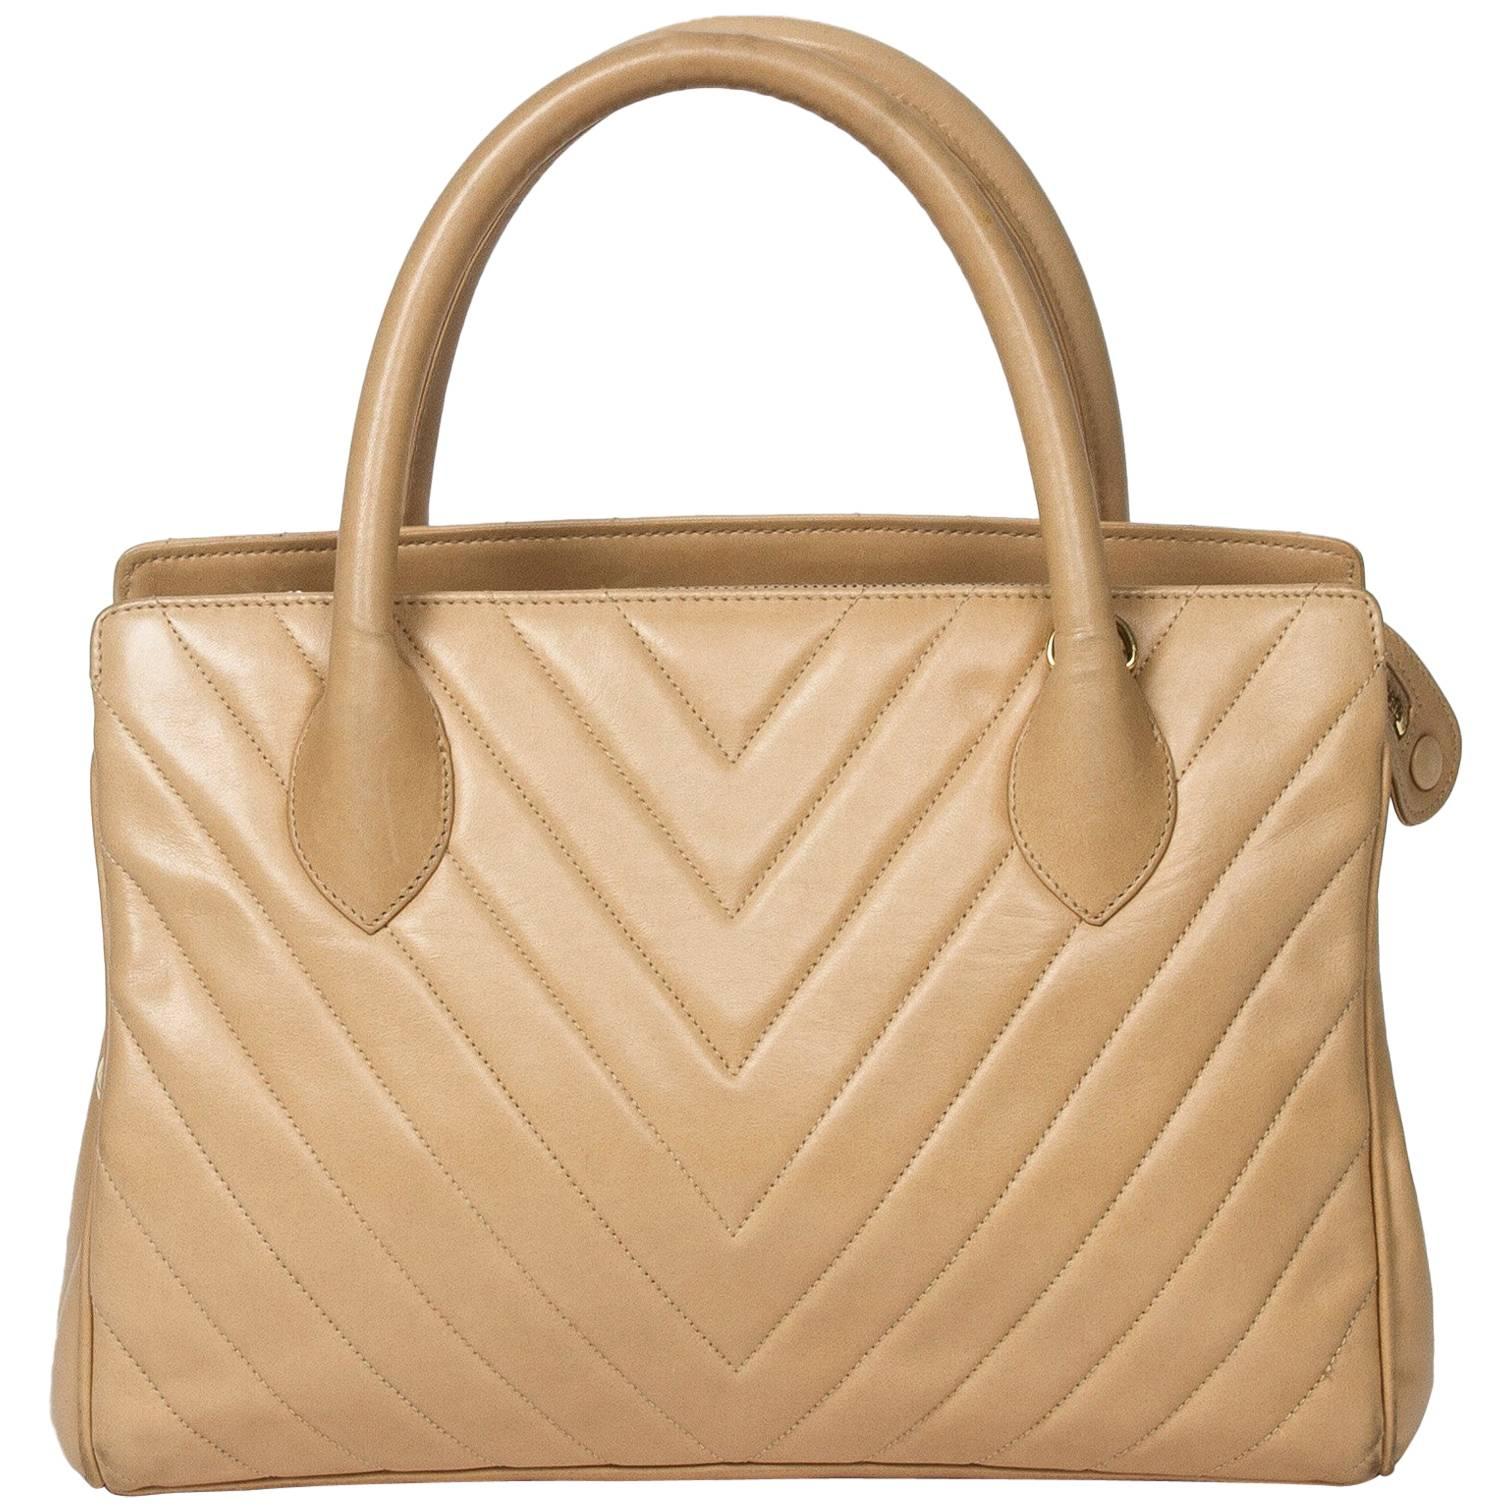 Chanel Handbag Beige Leather 